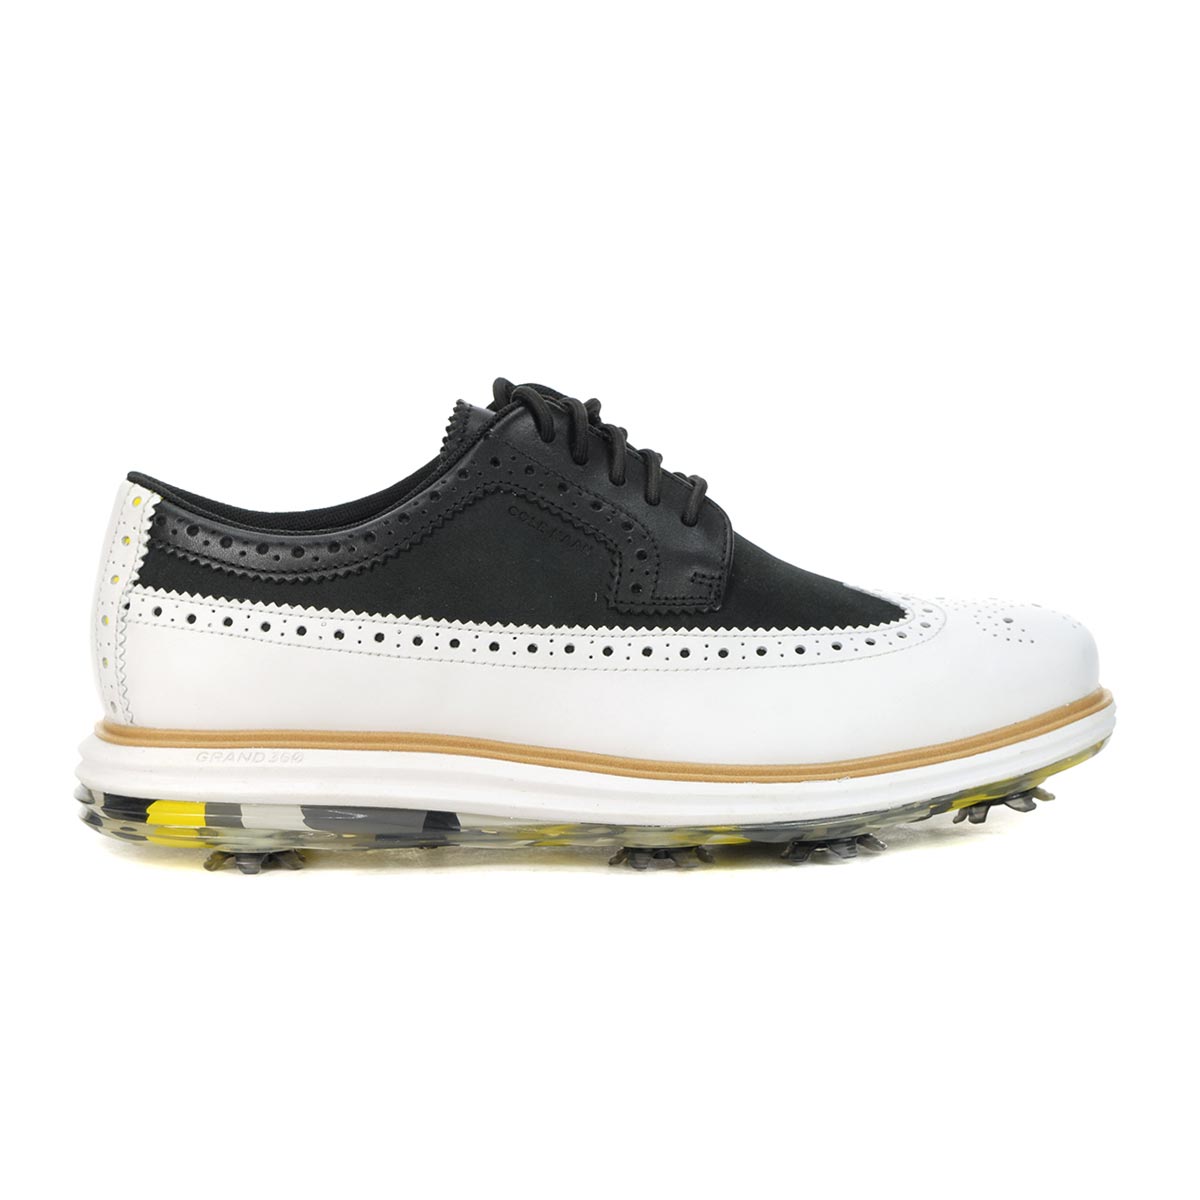 Cole Haan Men's OriginalGrand Tour Black/Optic White Dress Golf Shoes